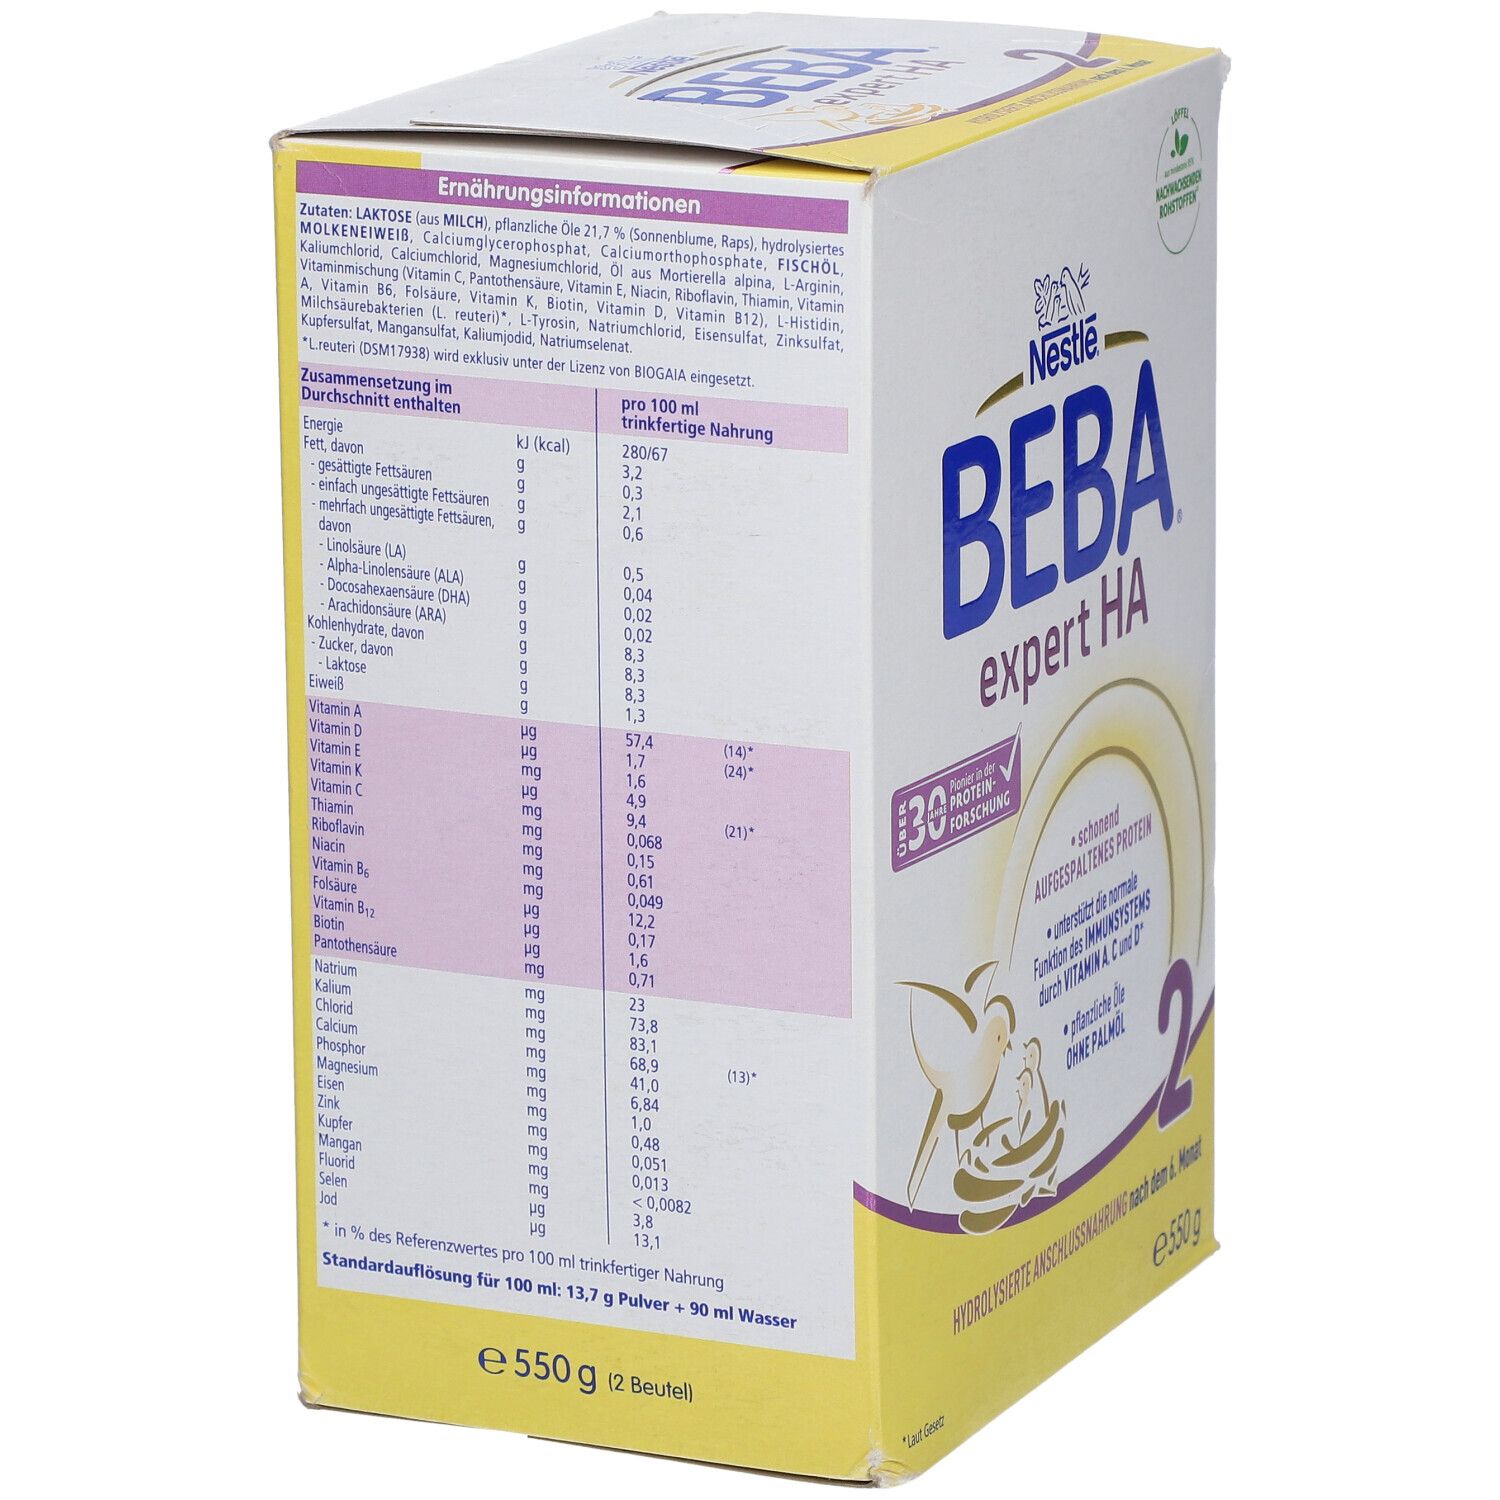 Nestlé Beba® Expert HA 2 Folgemilch ab dem 7. Monat